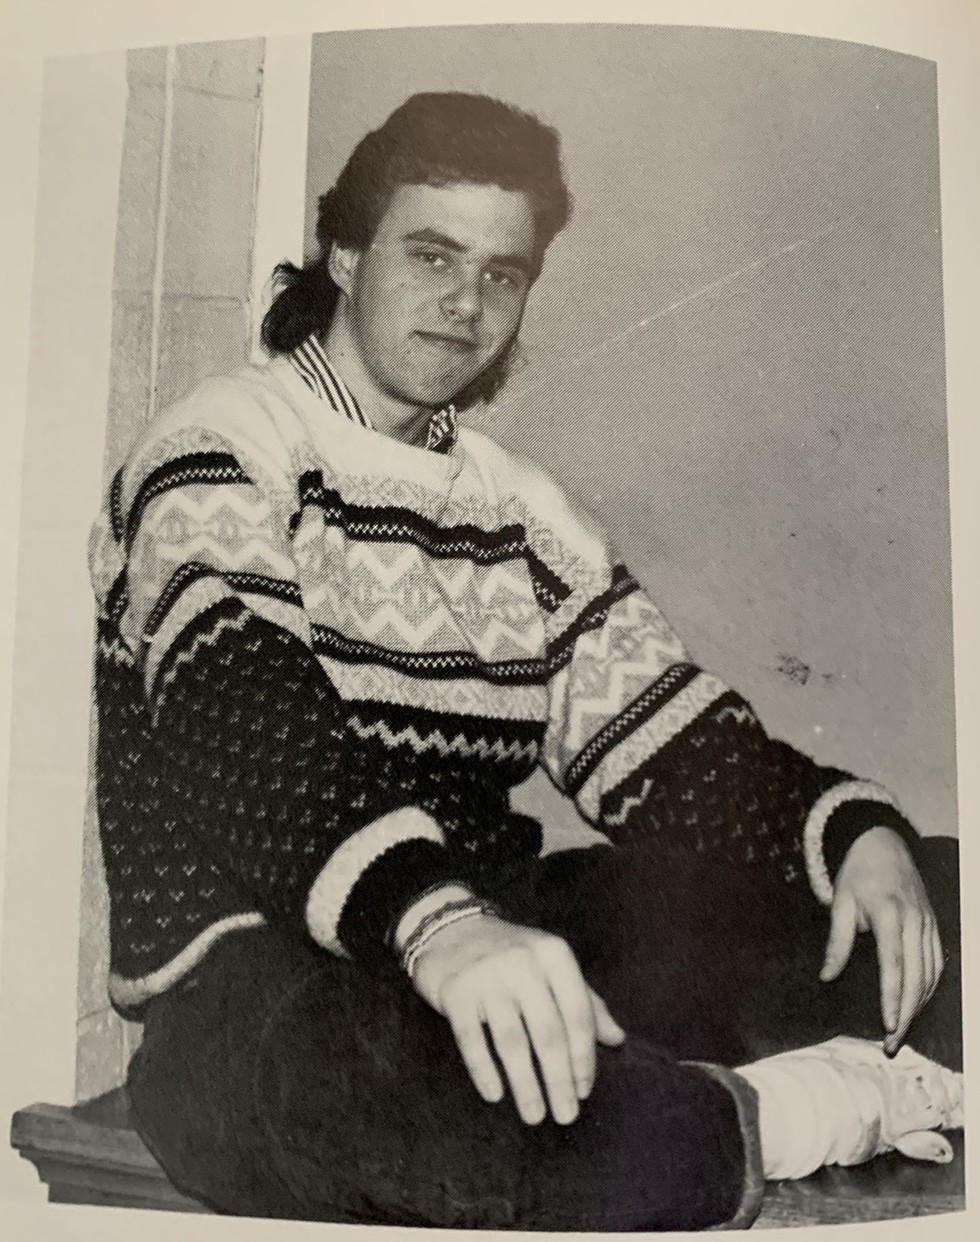 One very cocky high school senior in 1988.